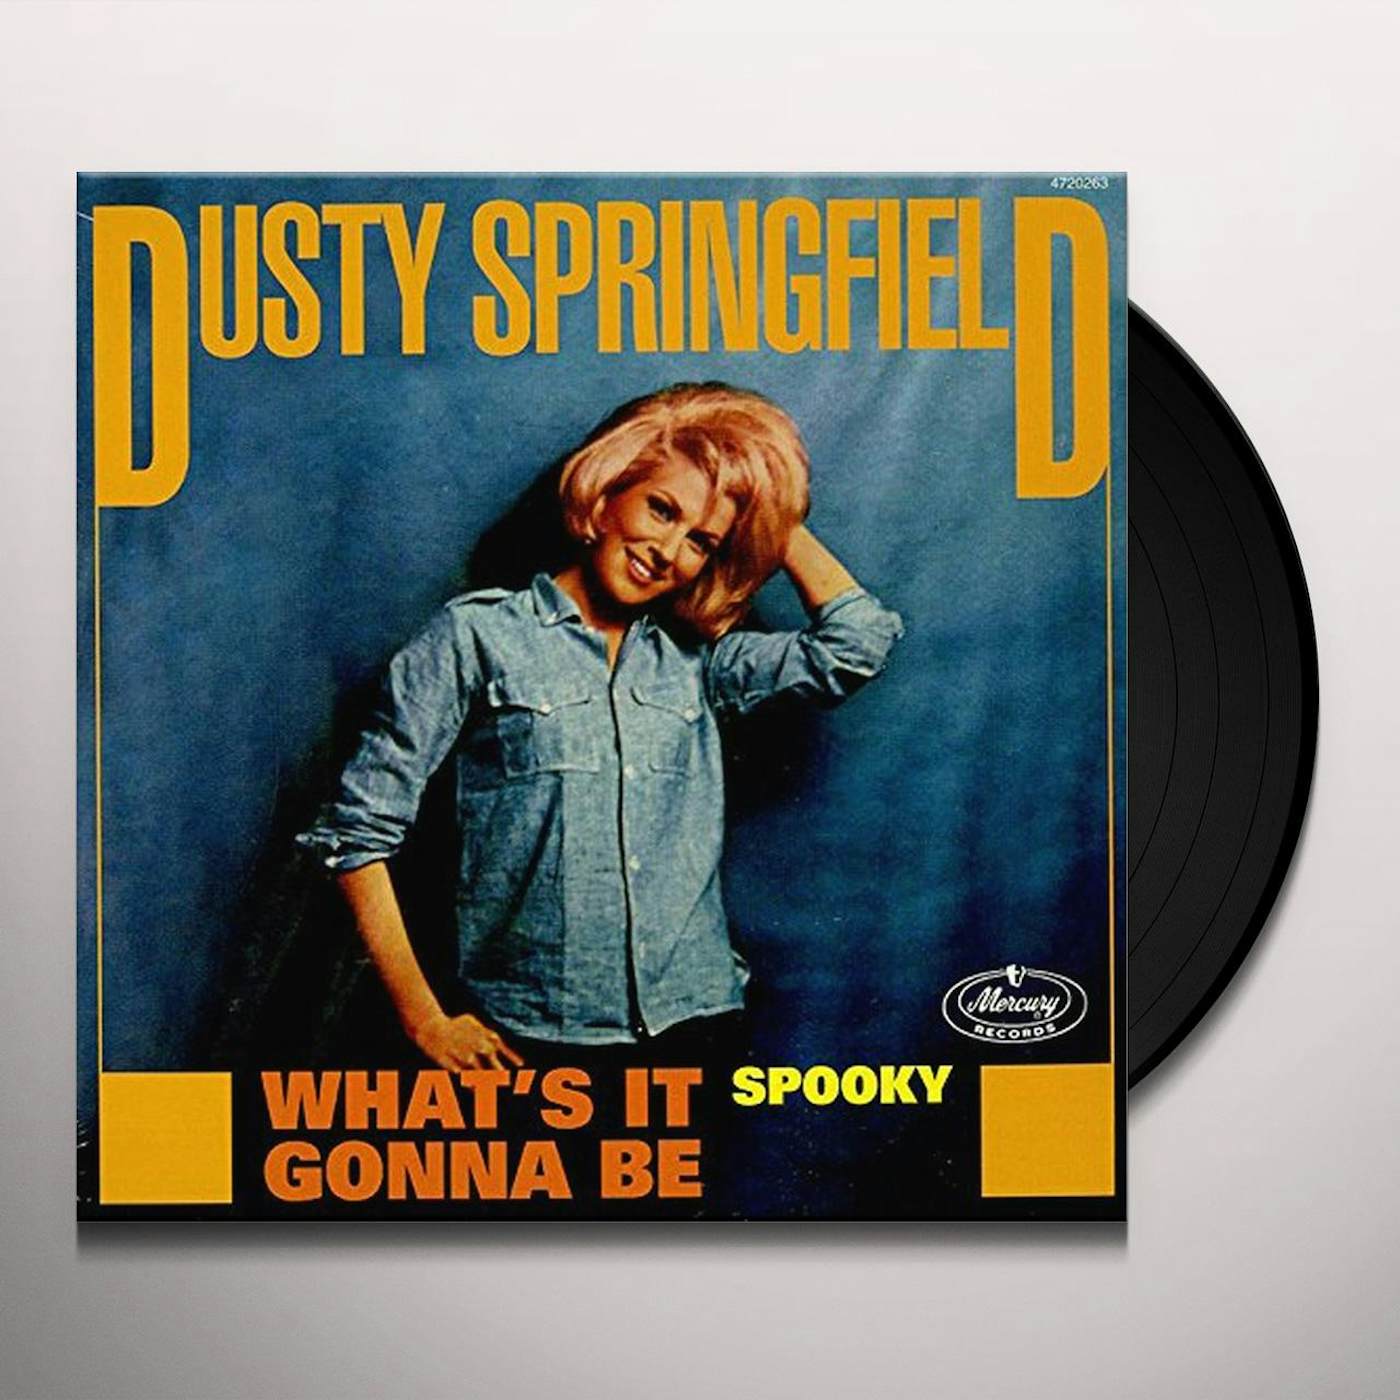 Dusty Springfield WAHT'S IT GONNA BE Vinyl Record